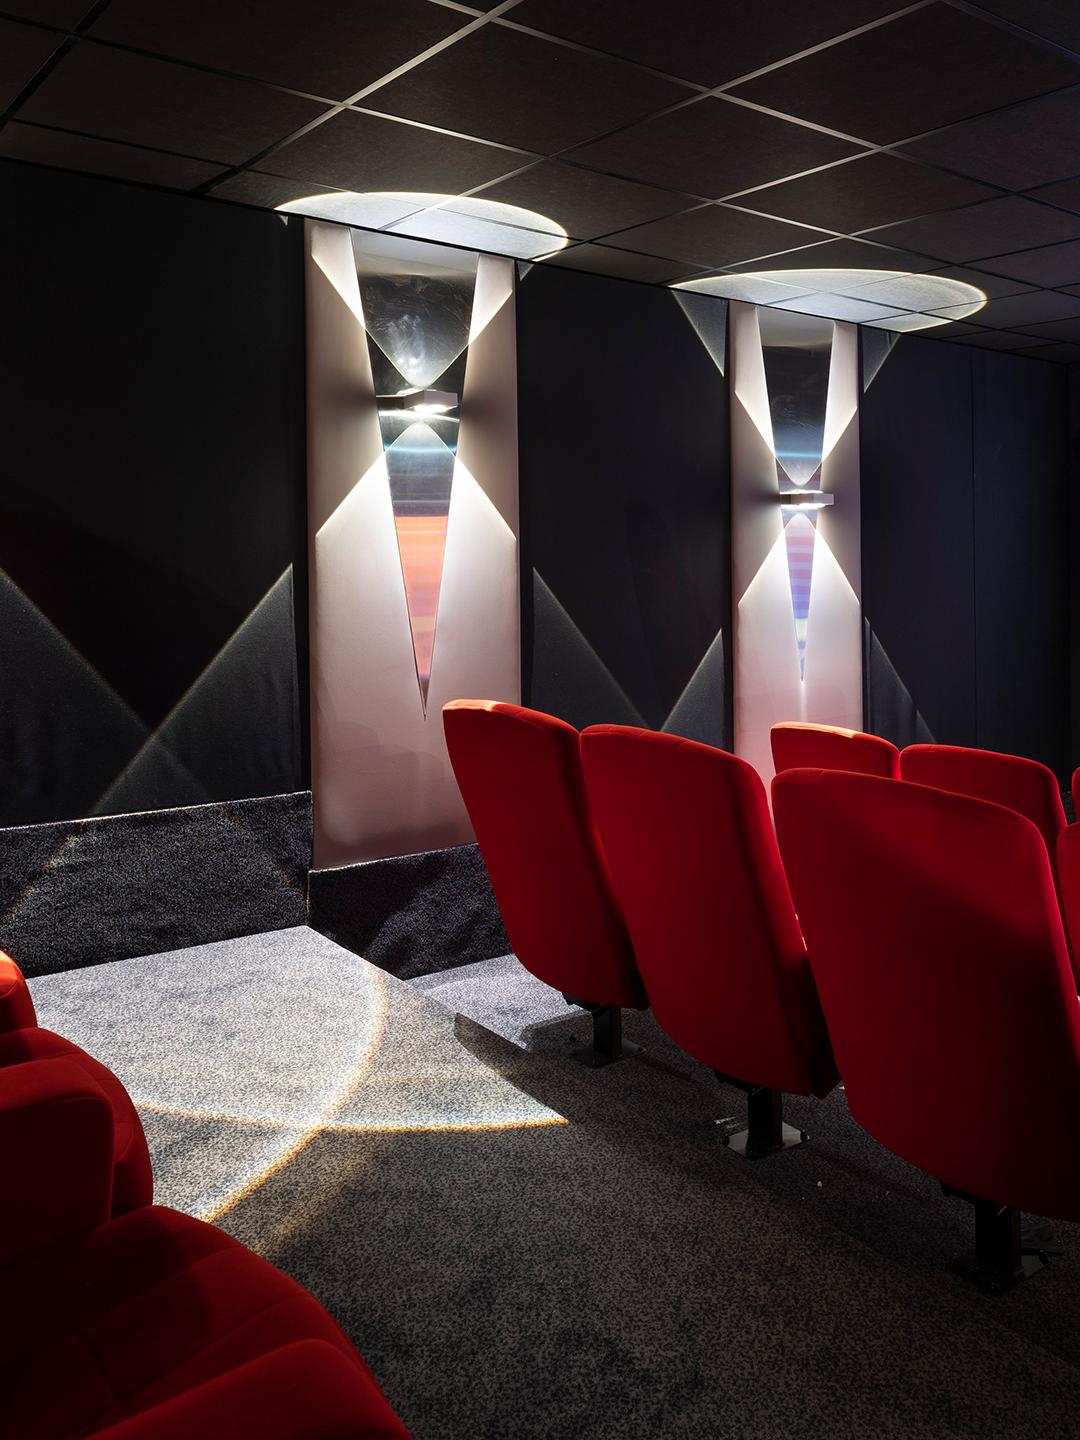 Destination Samoens - Hotel Alexane - cinéma - popcorn - fauteuil rouge